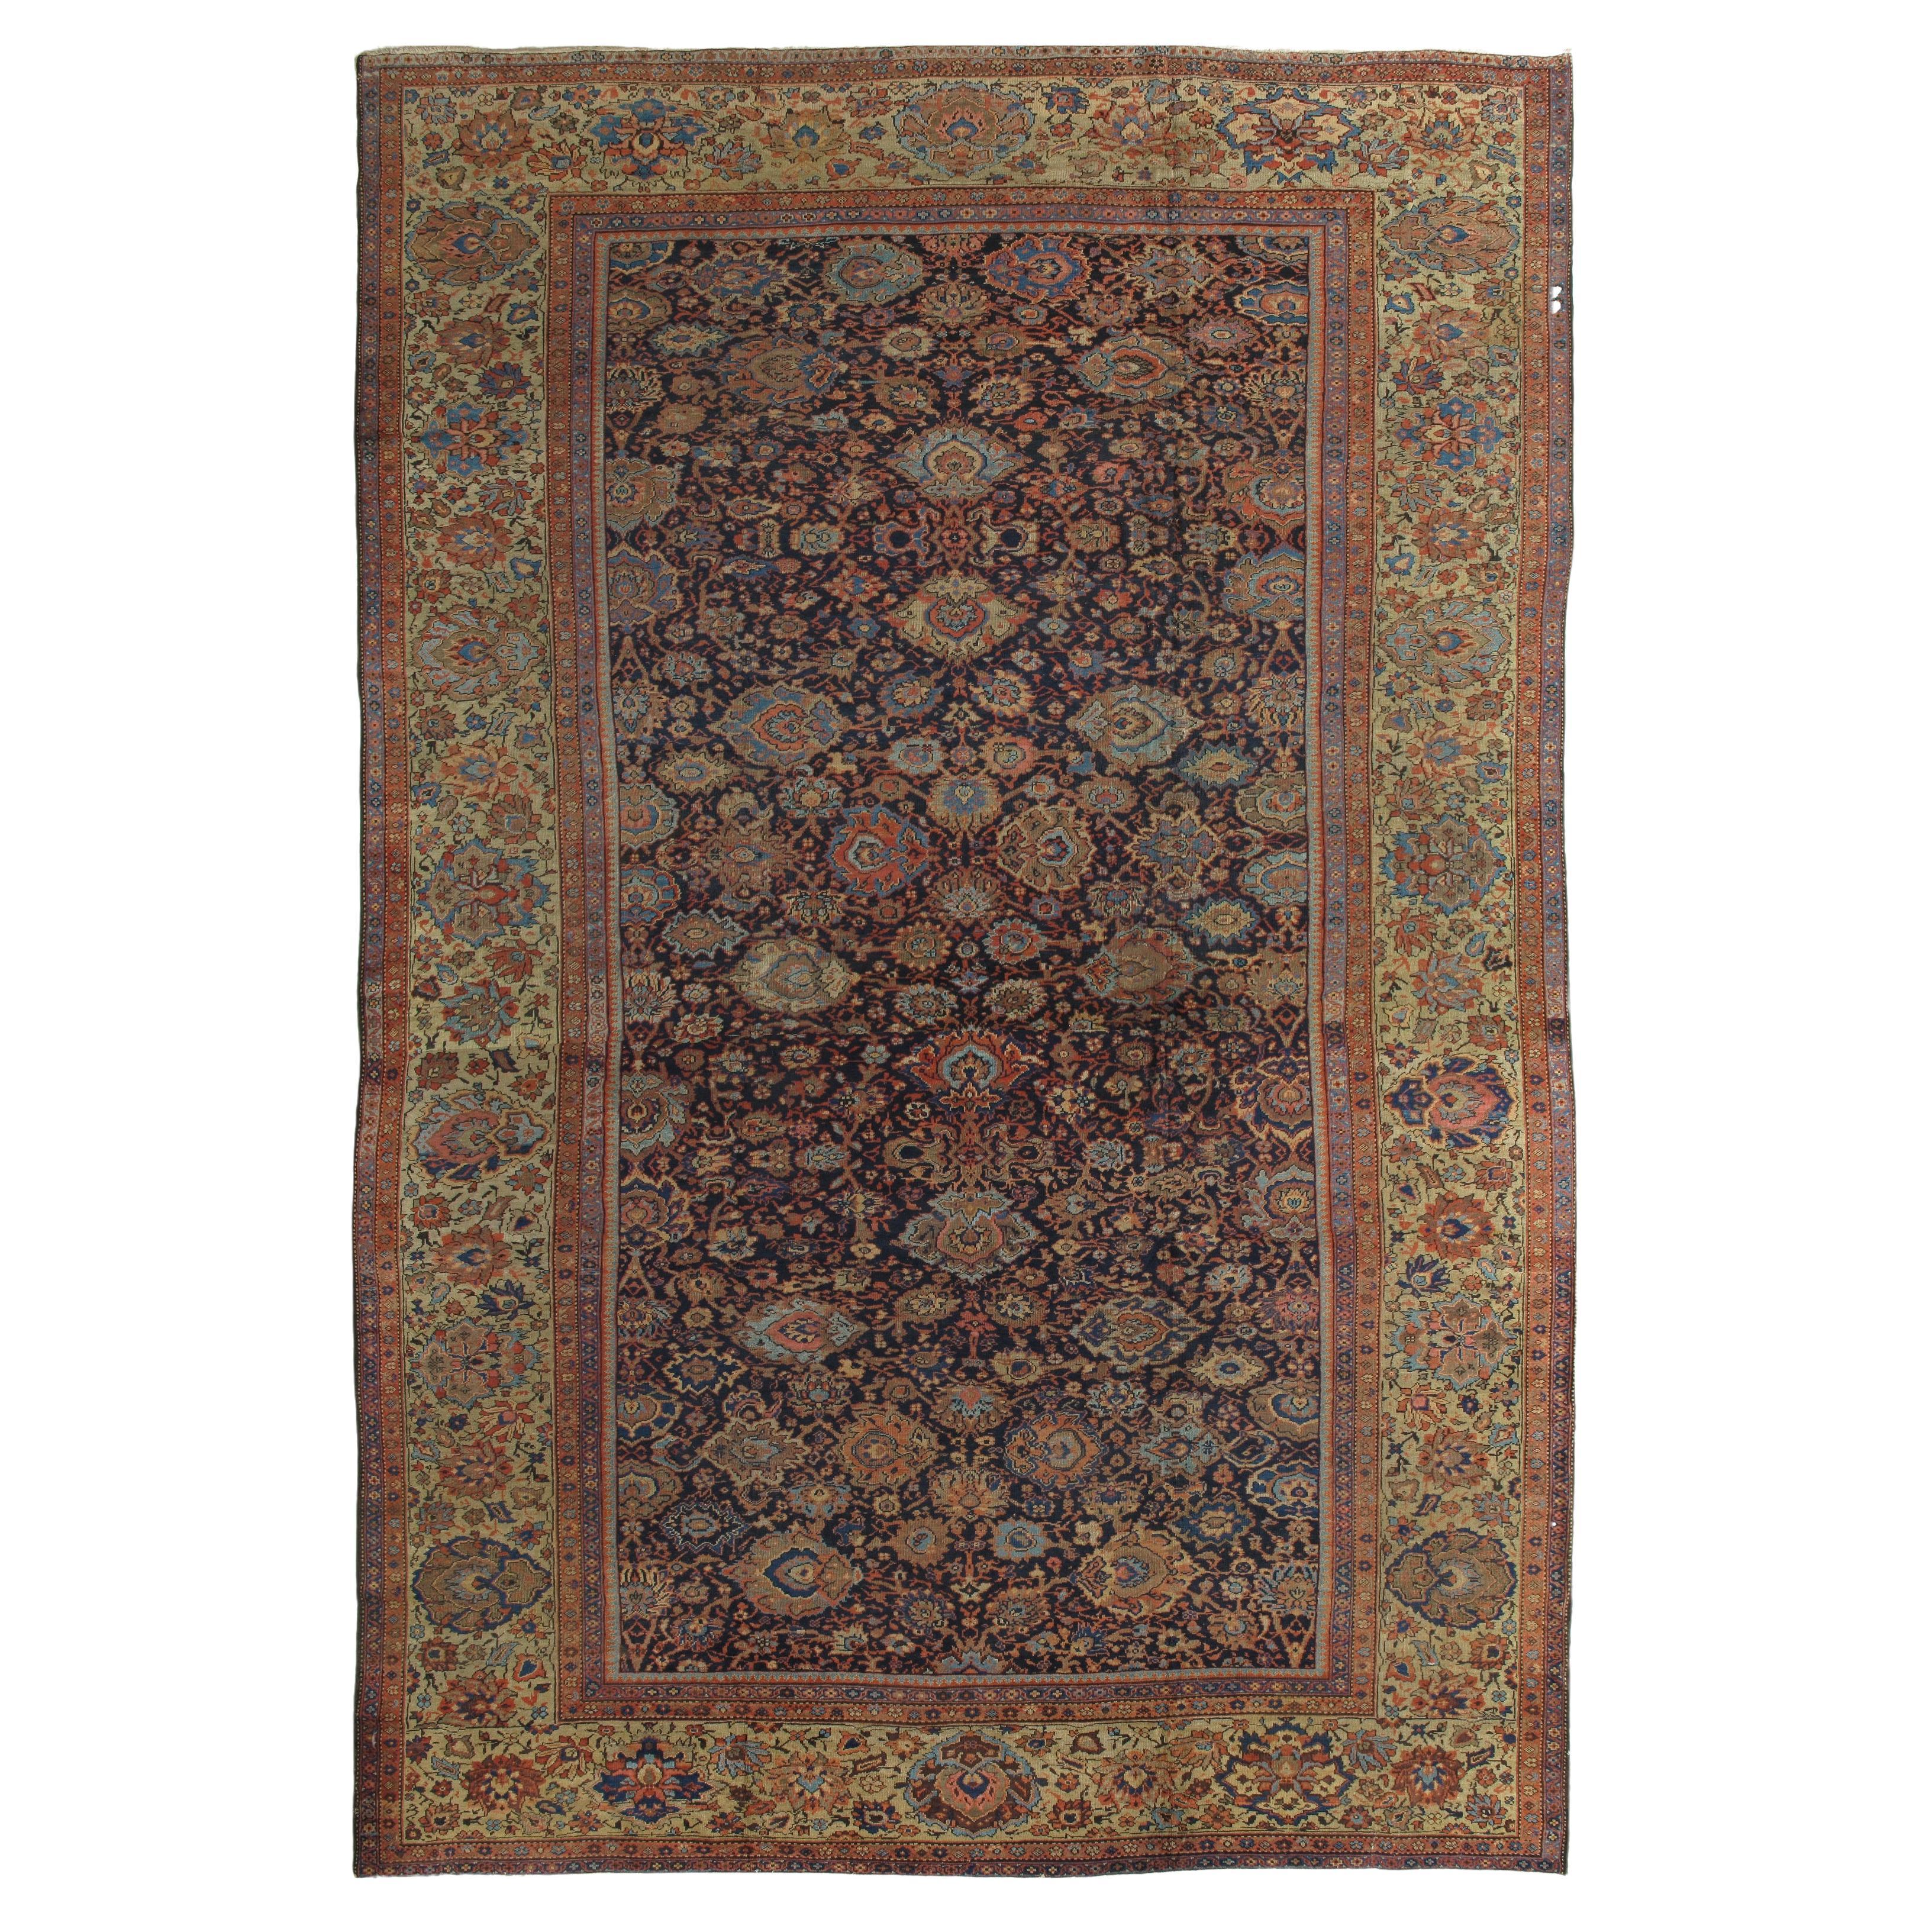 Antique Persian Sultanabad Carpet, Handmade Oriental Rug, Navy Blue, Rust, Gold